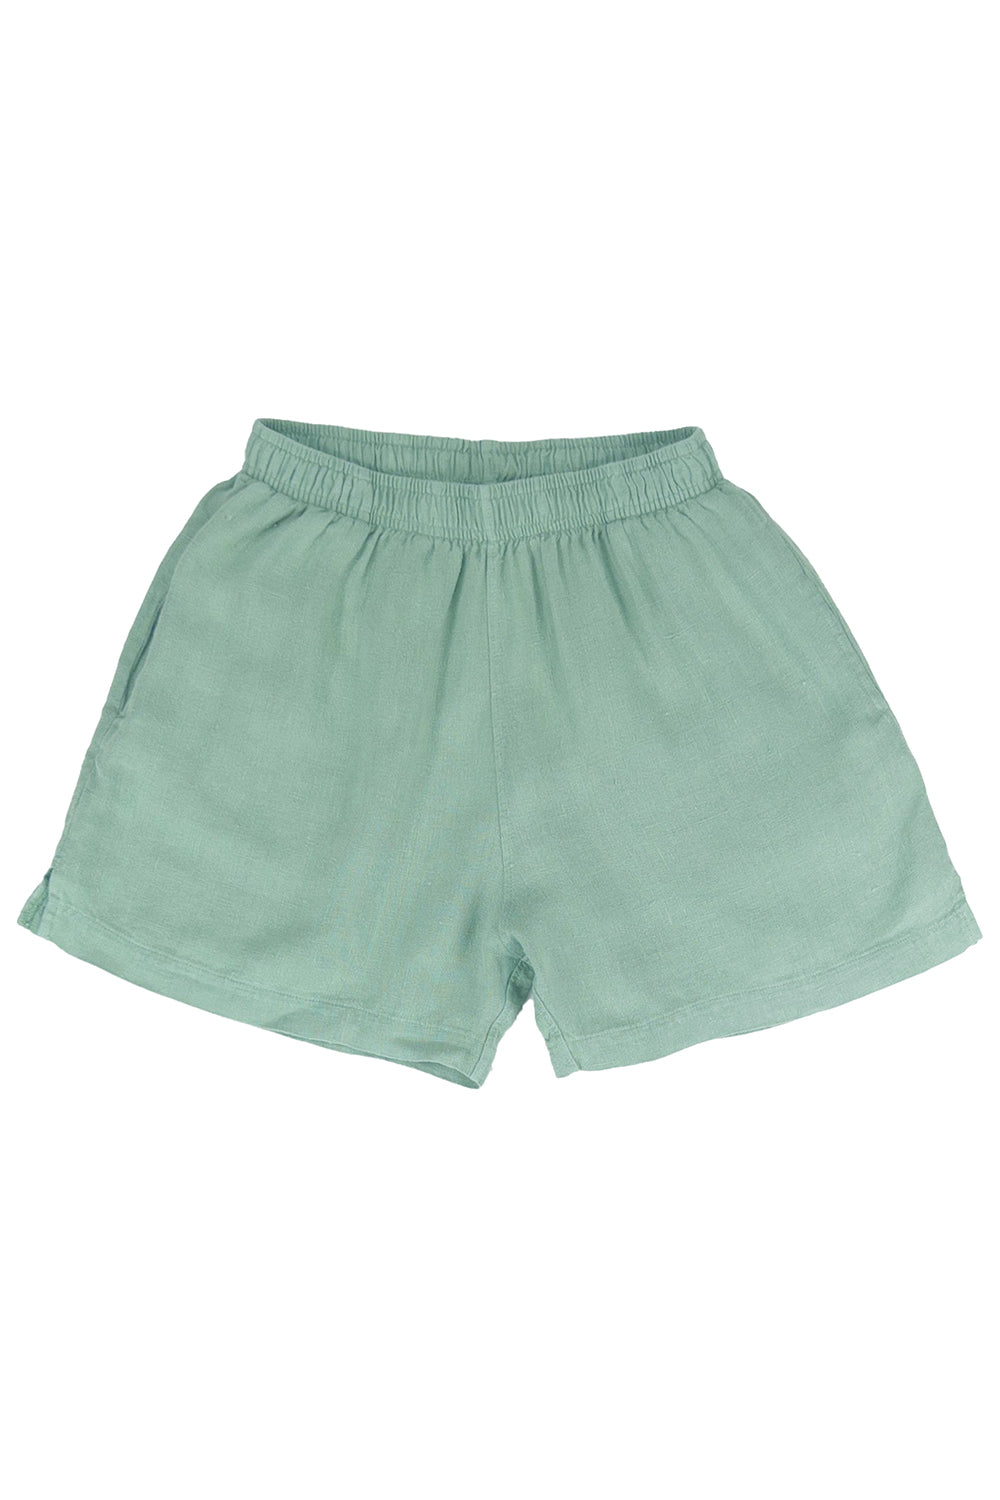 Makena 100% Hemp Short | Jungmaven Hemp Clothing & Accessories / Color: Sage Green